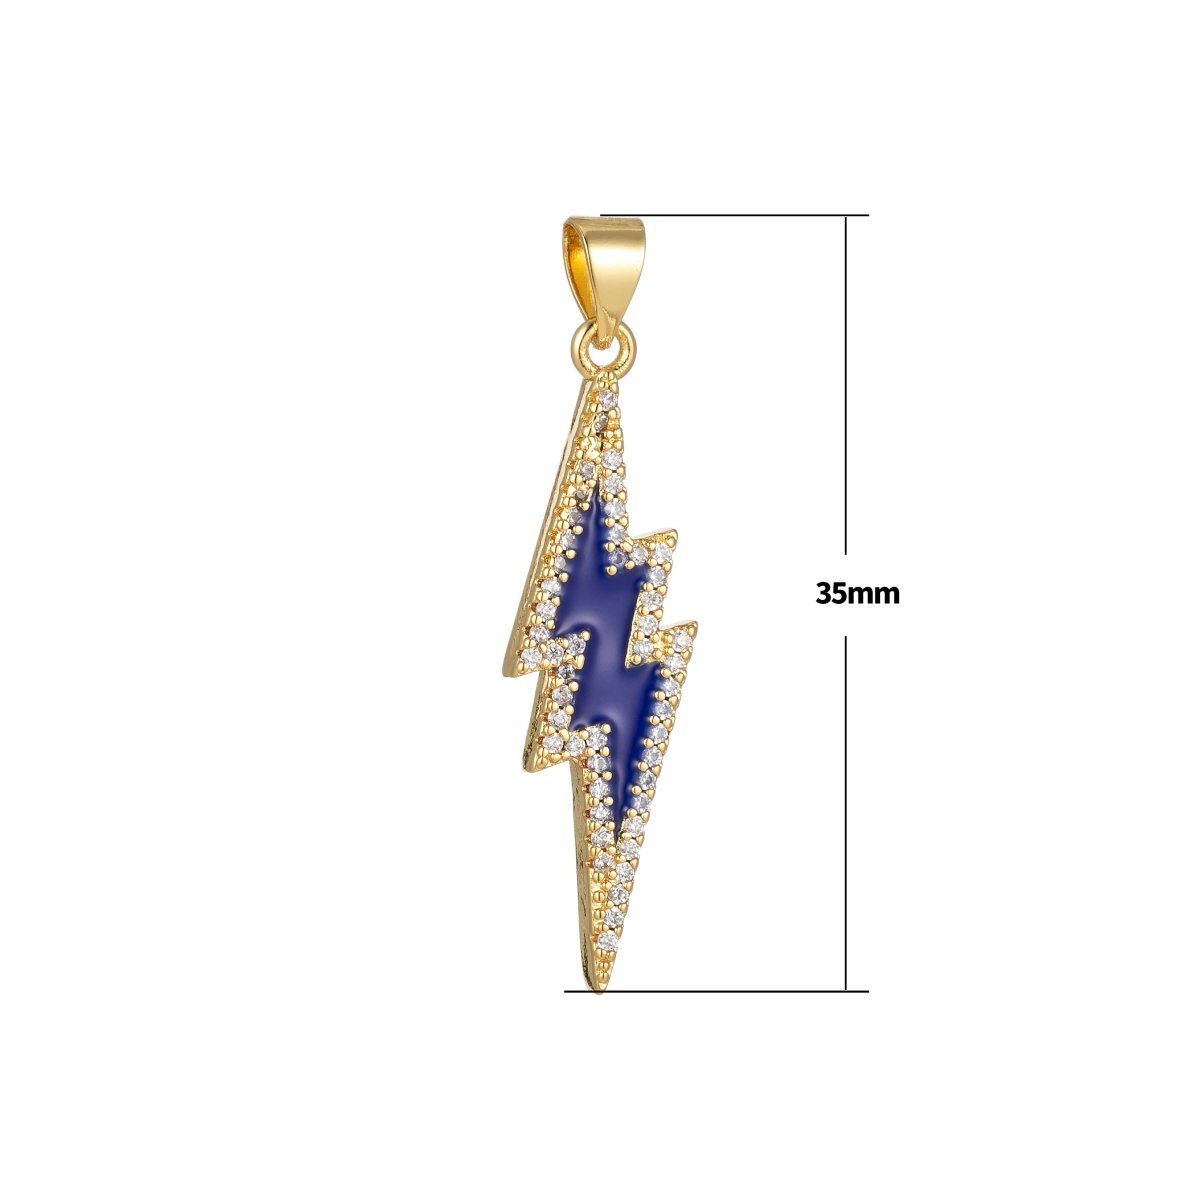 Enamel Lighting Gold Micro Pave Charm Lightning Bolt Pendant, Statement Bold Bolt, Wizard Charm, Thunder Pendant for Necklace H-846 H-851 H-852 H-855 H-876 - DLUXCA